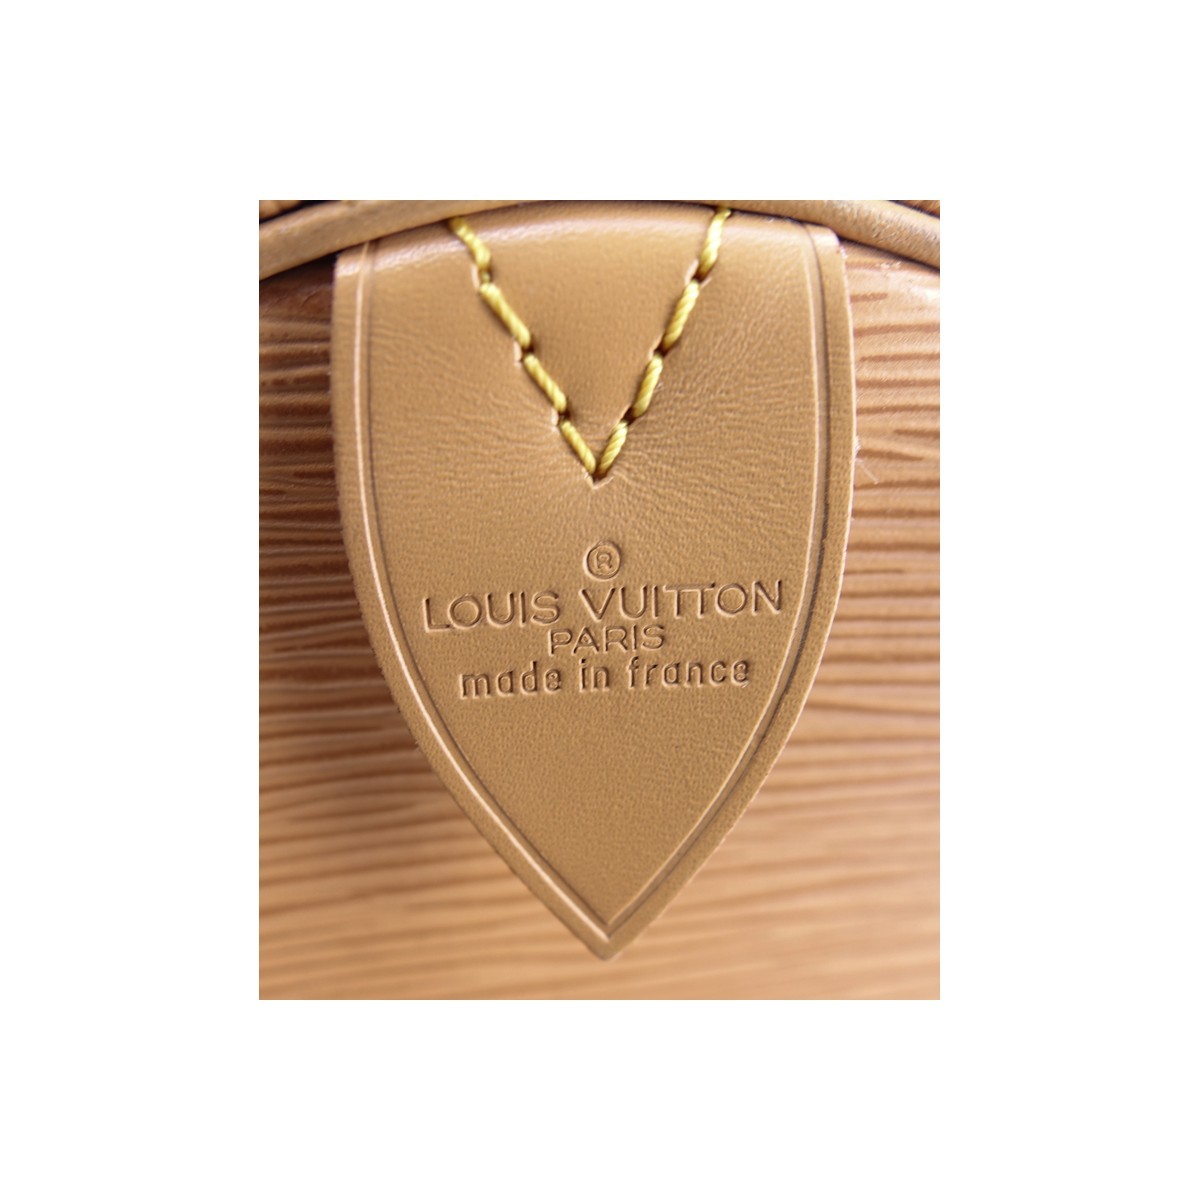 Louis Vuitton Light Beige Epi Leather Keepall Travel Bag. Golden brass hardware, beige leather interior, luggage tag.